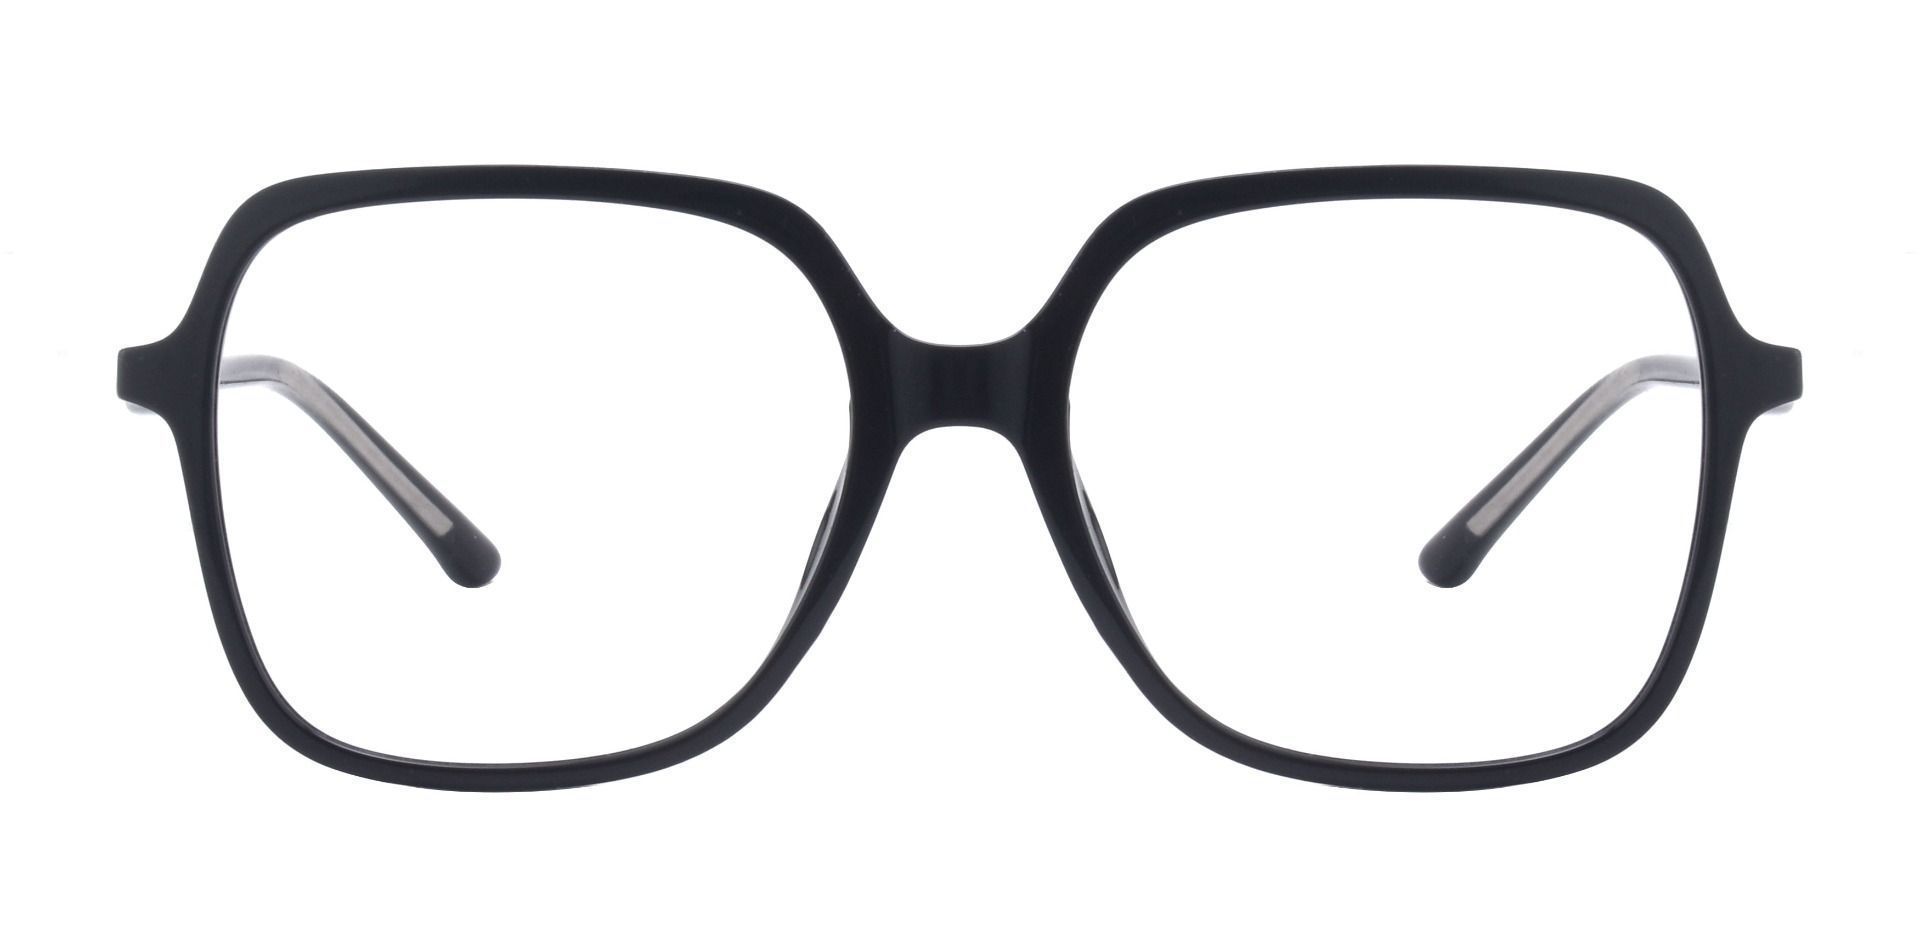 Zion Square Prescription Glasses - Black | Men's Eyeglasses | Payne Glasses